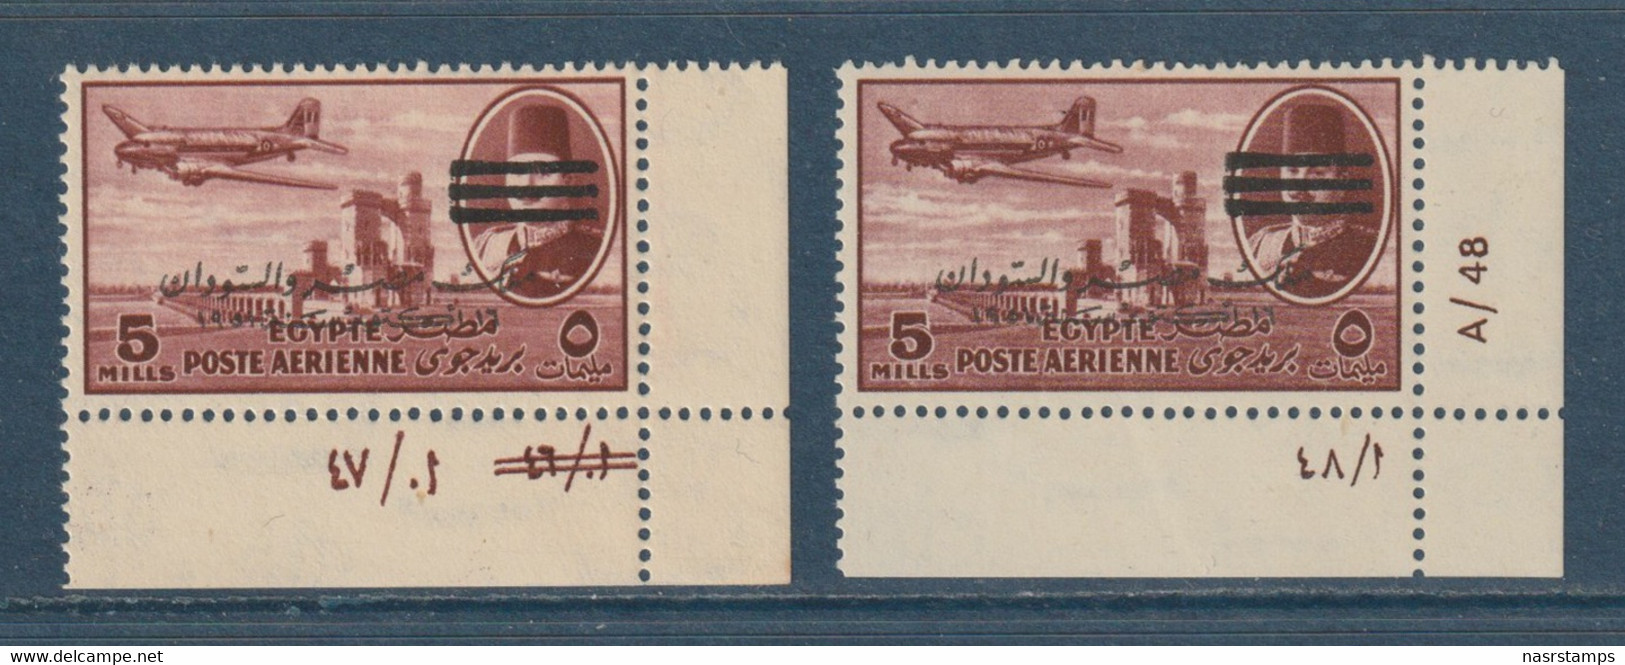 Egypt - 1953 - King Farouk - E&S - 3 Bars - Different Control No. - Unused Stamps